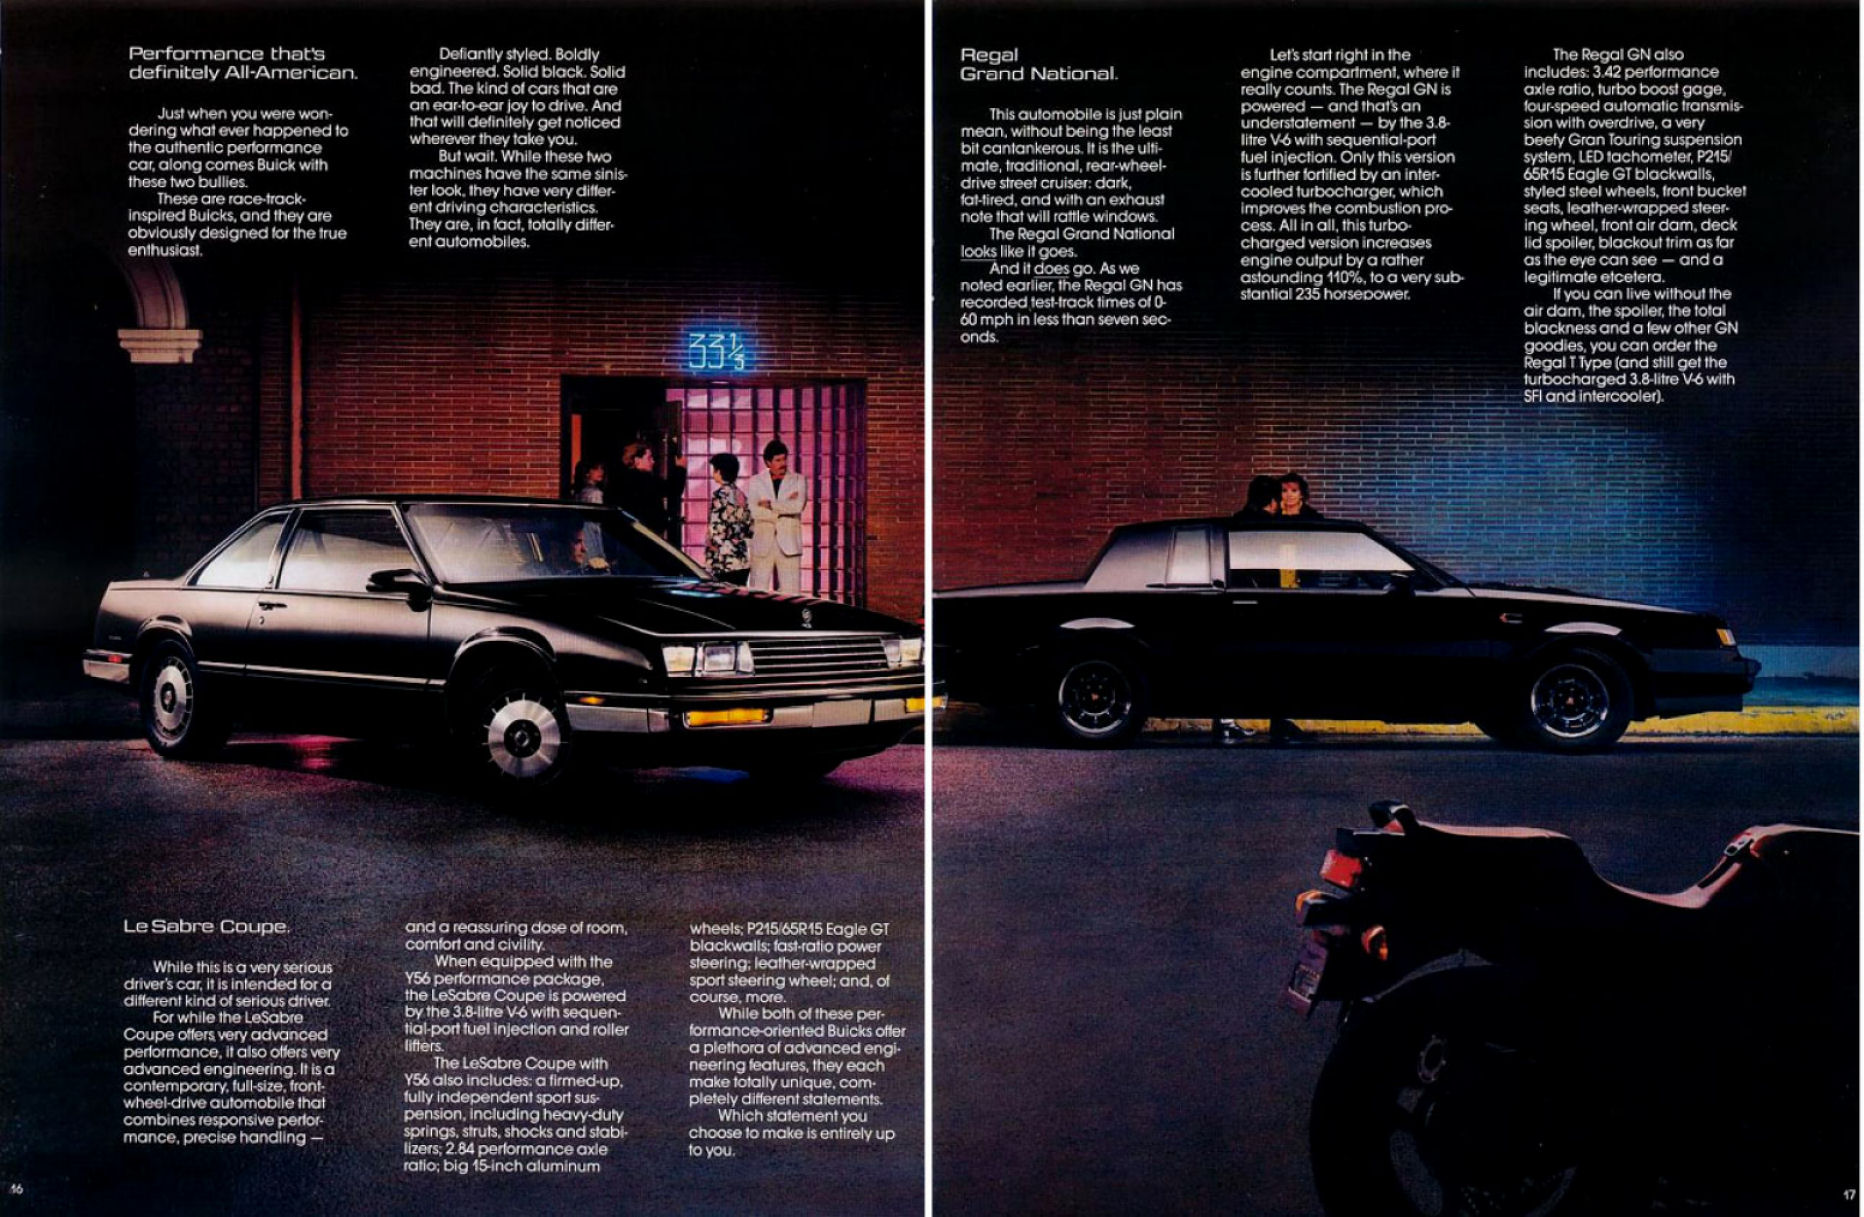 1986 Buick Performance-16-17